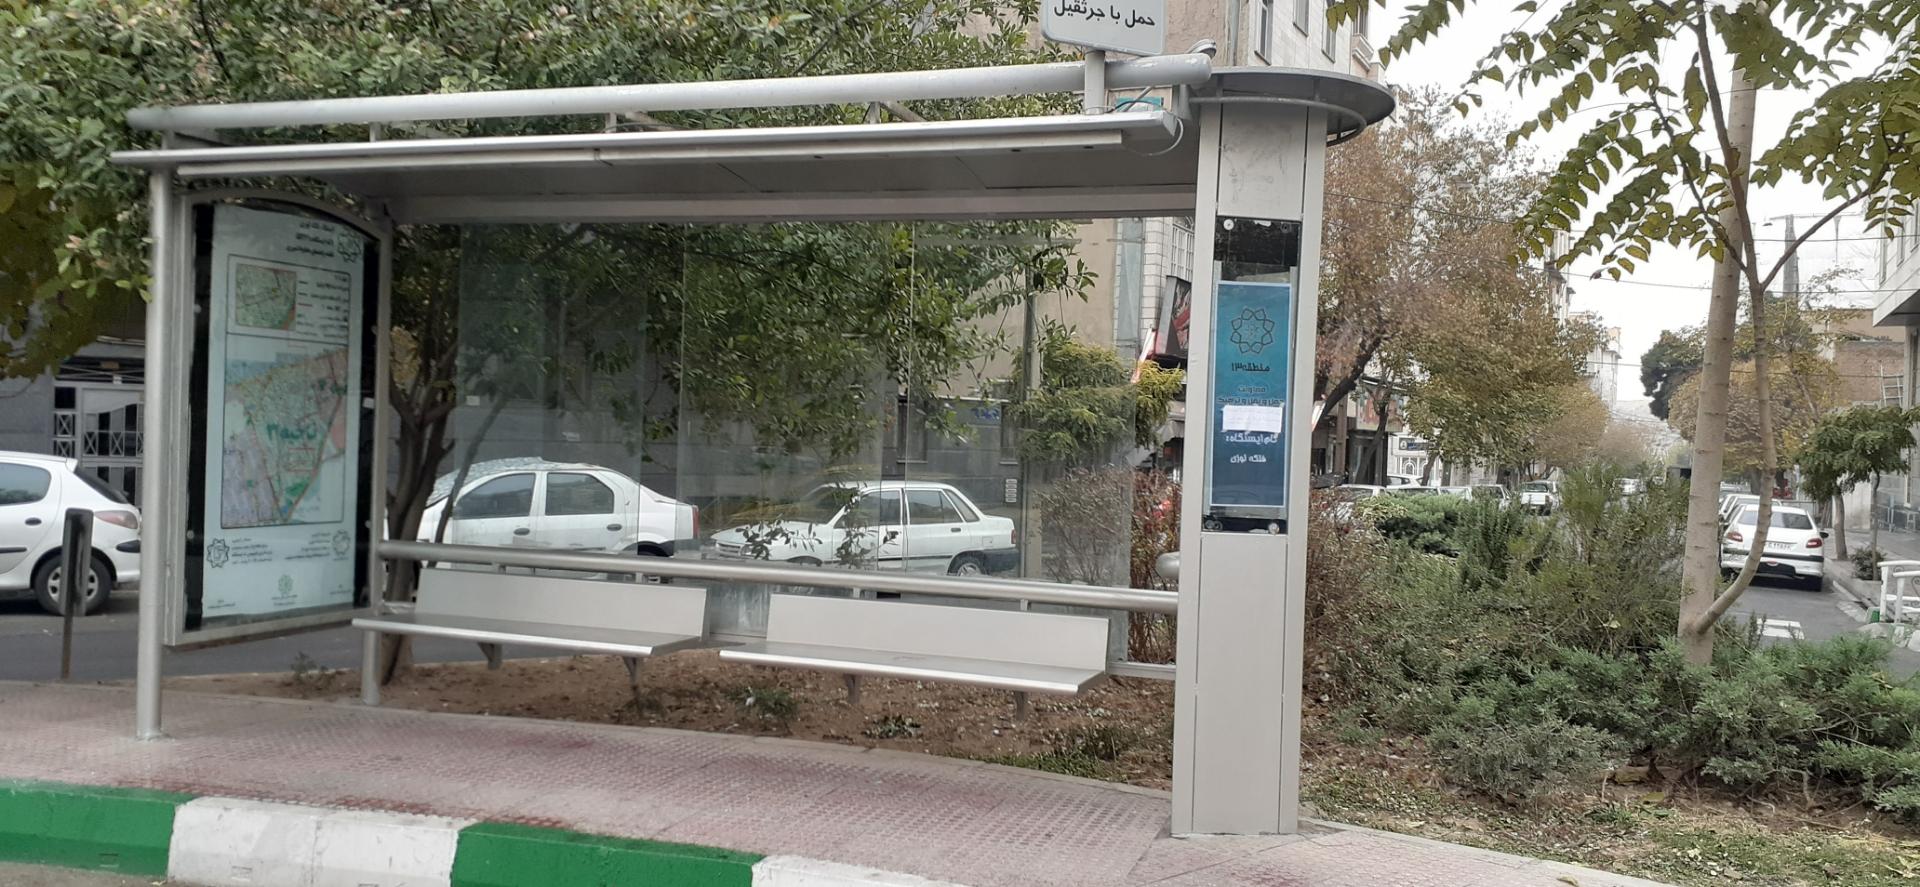 عکس ایستگاه اتوبوس فلکه لوزی